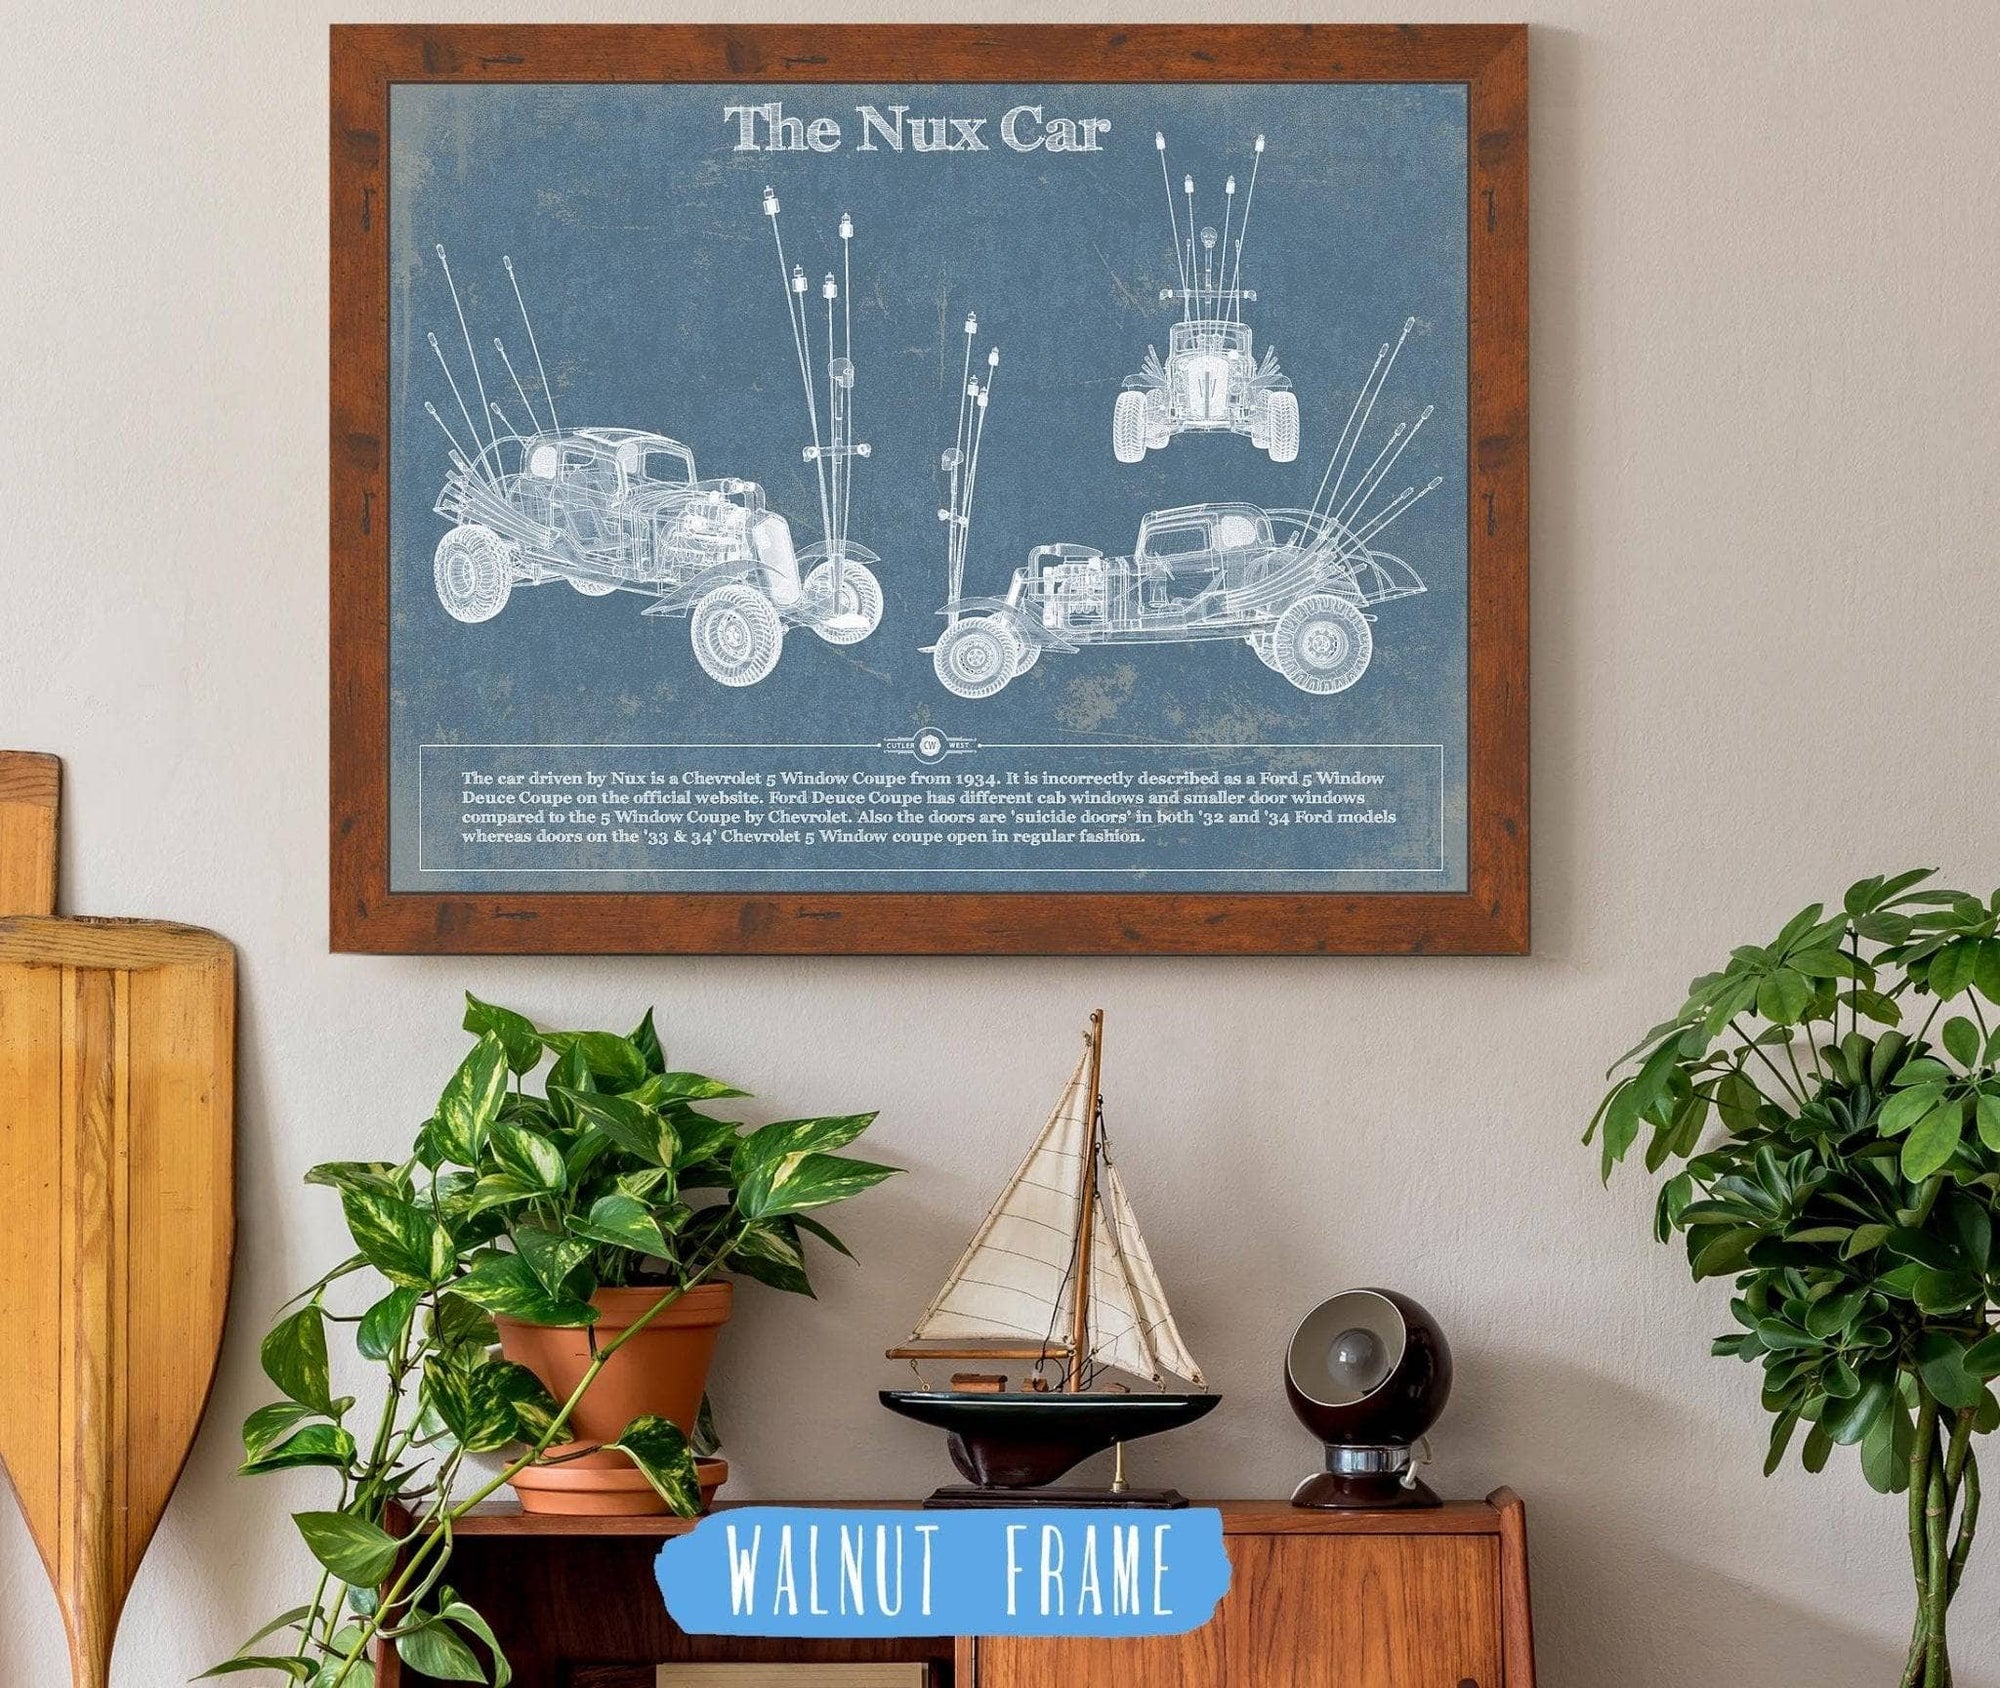 Cutler West Vehicle Collection The Nux Car (Chevrolet 5 Window Coupe 1934)  Blueprint Vintage Auto Print